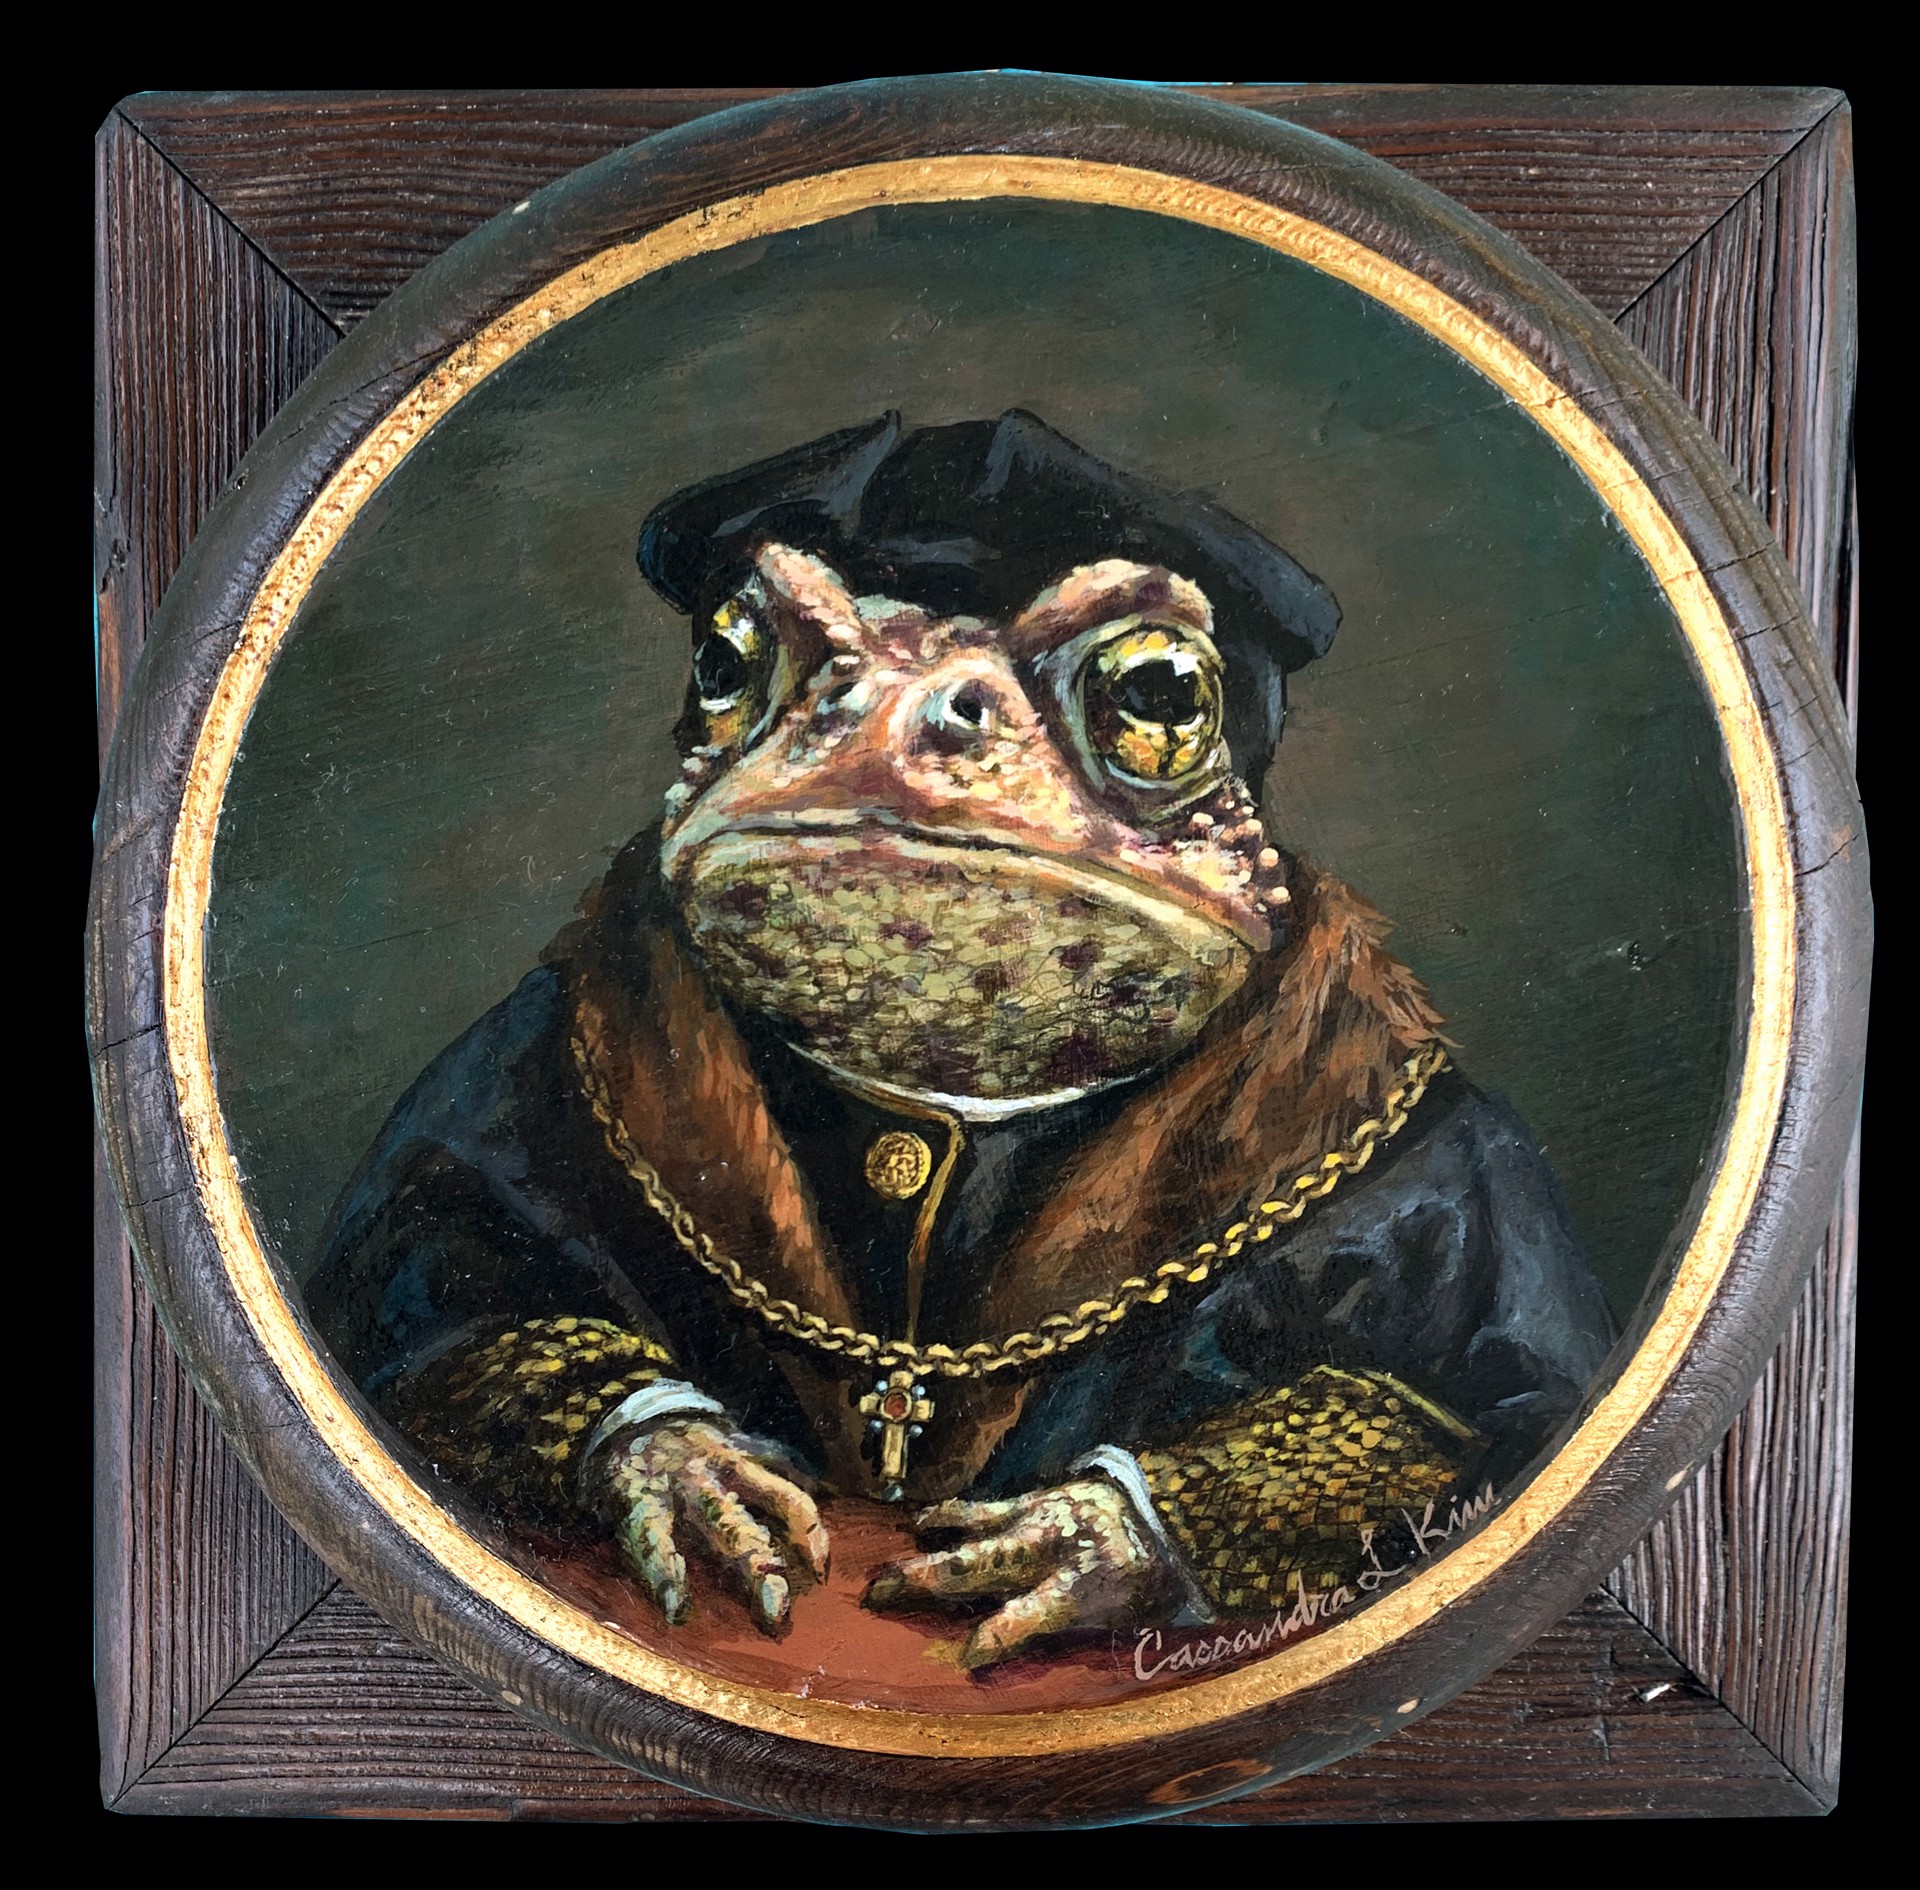 Sir Toad Tuke by Cassandra Kim